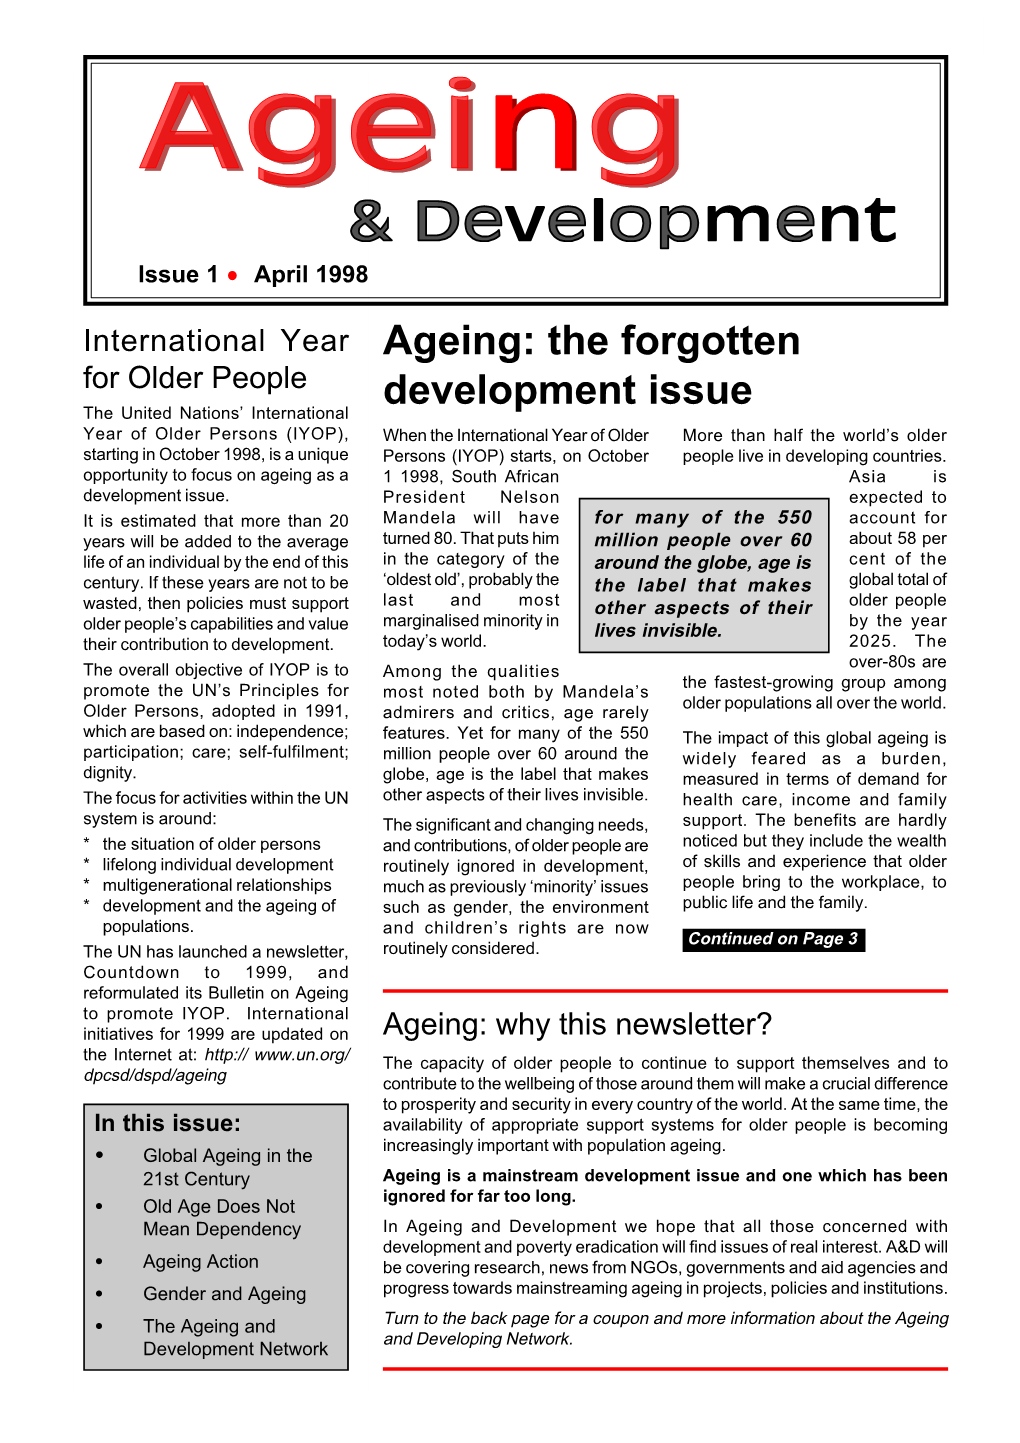 Ageing & Development, Issue 1